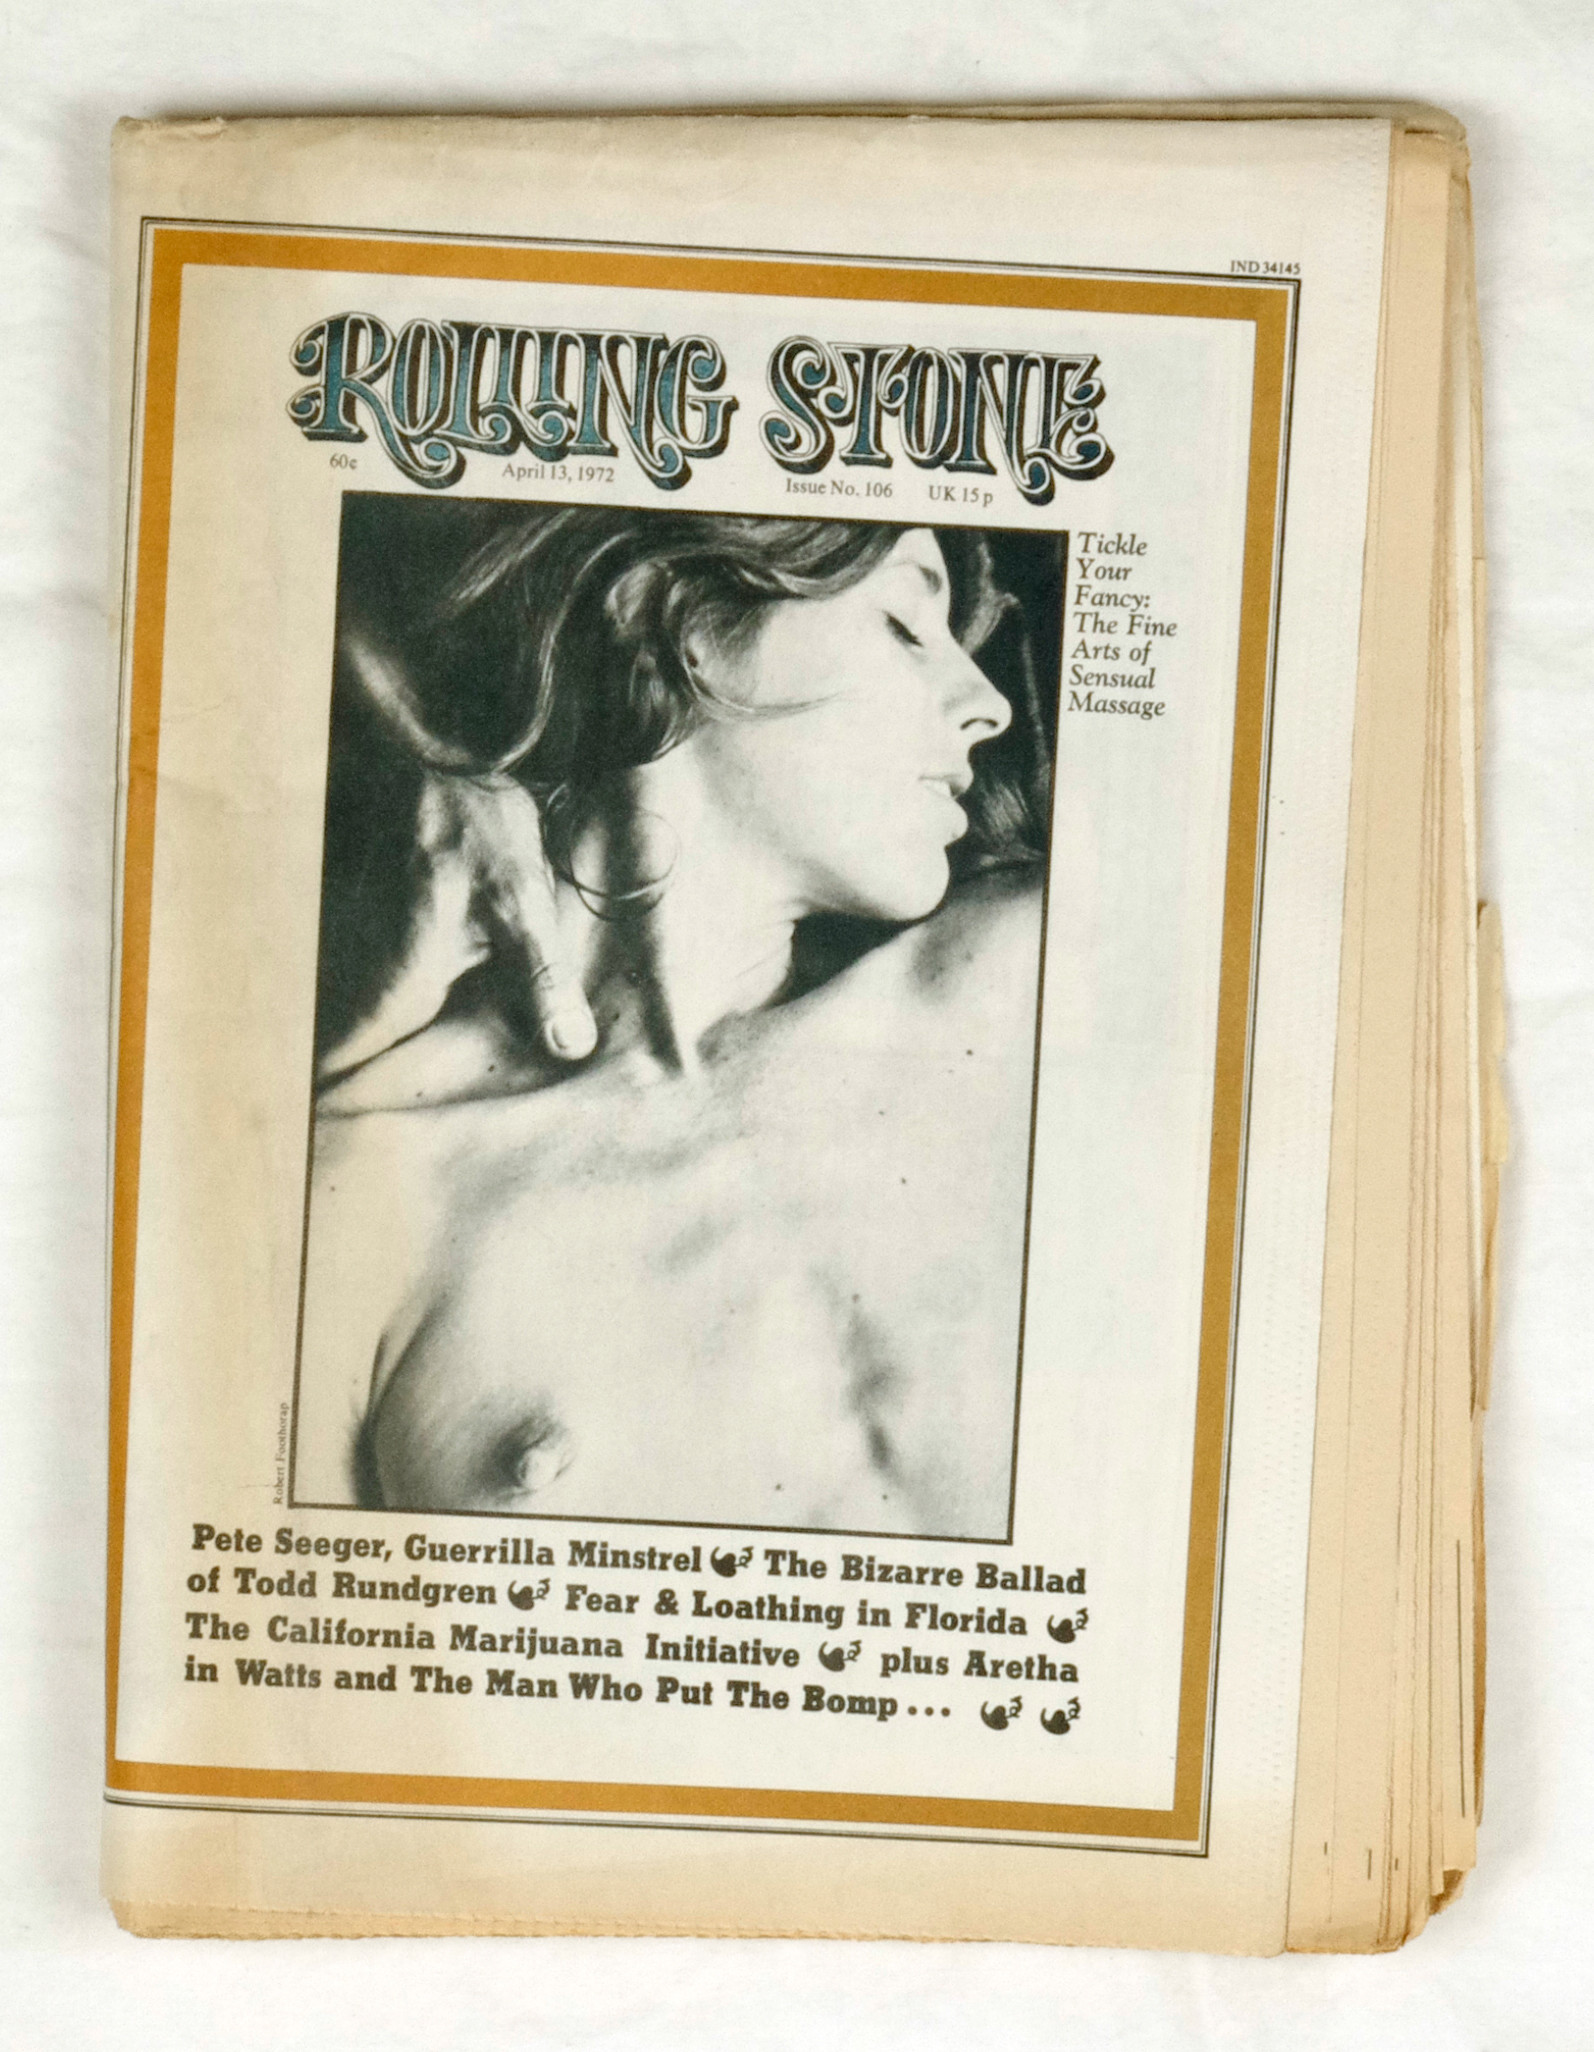 Rolling Stone Magazine Back Issue 1972 April 13 No 106 The Fine Art of Sensual Massage 